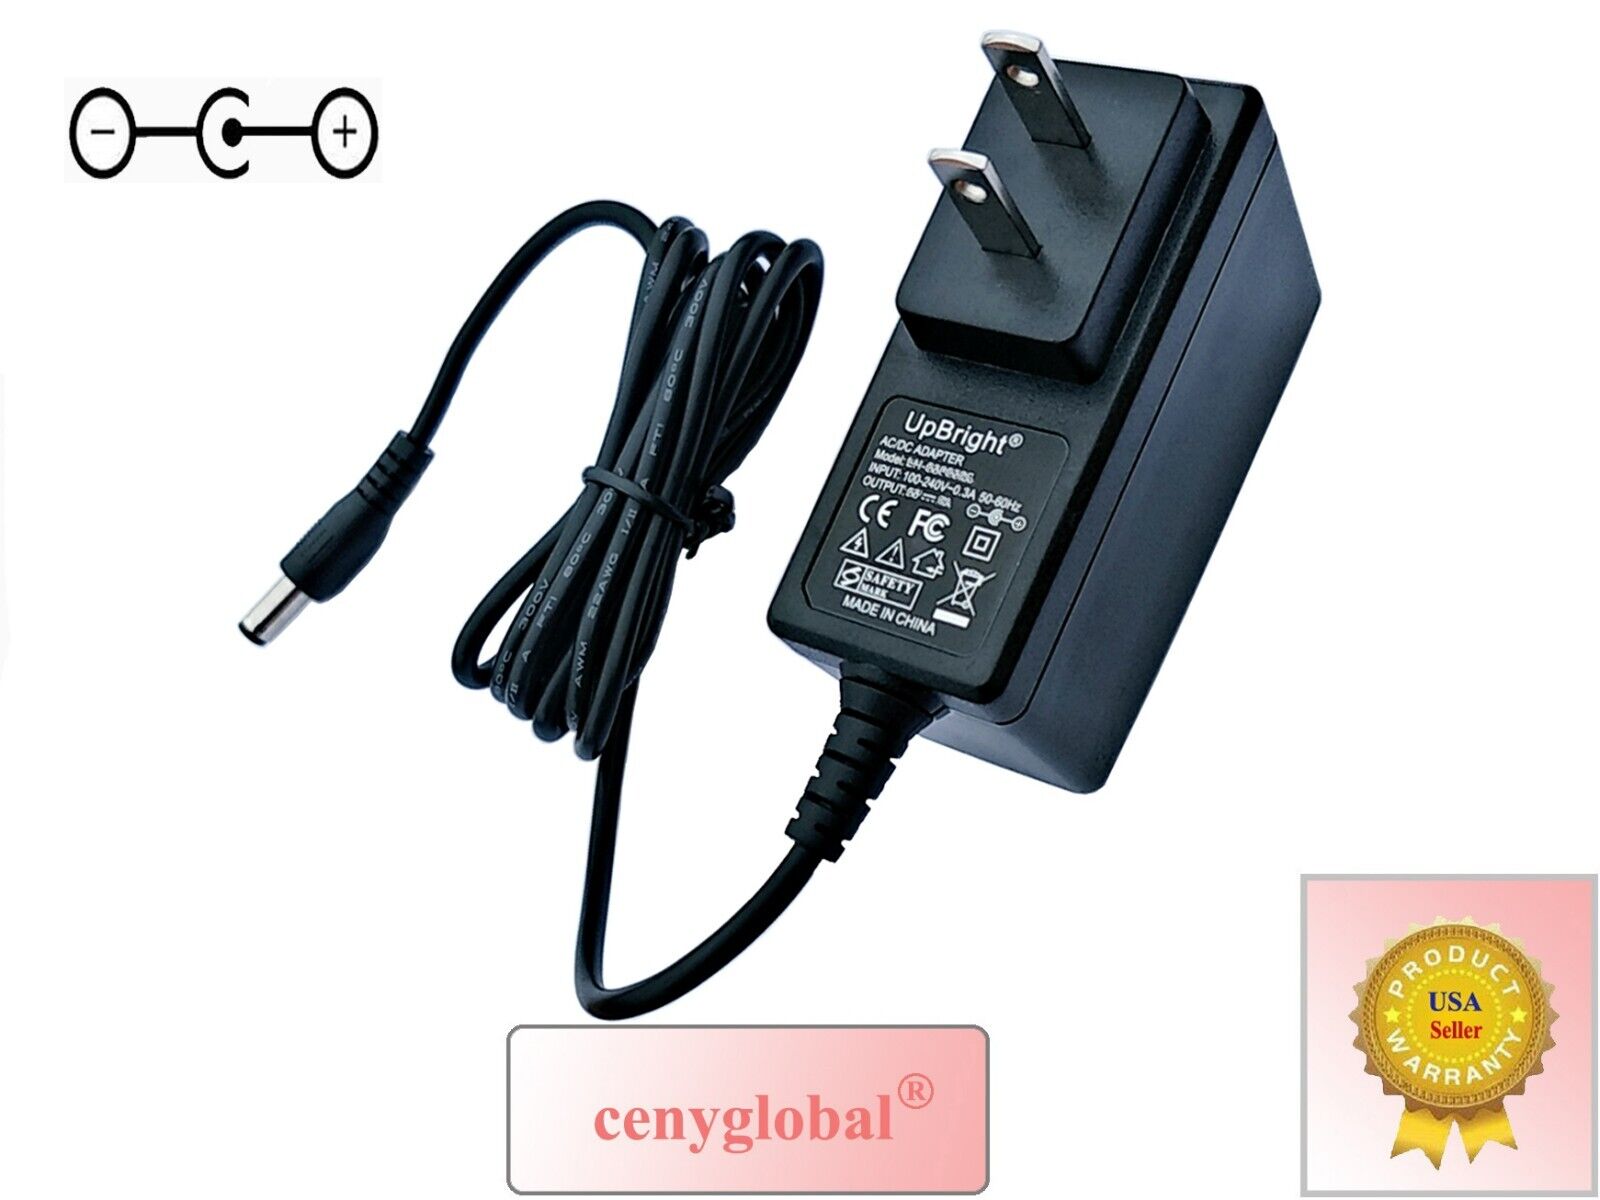 AC 100V-240V Converter Adapter DC Power Supply Plug 5.5mm x 2.5mm Series Global